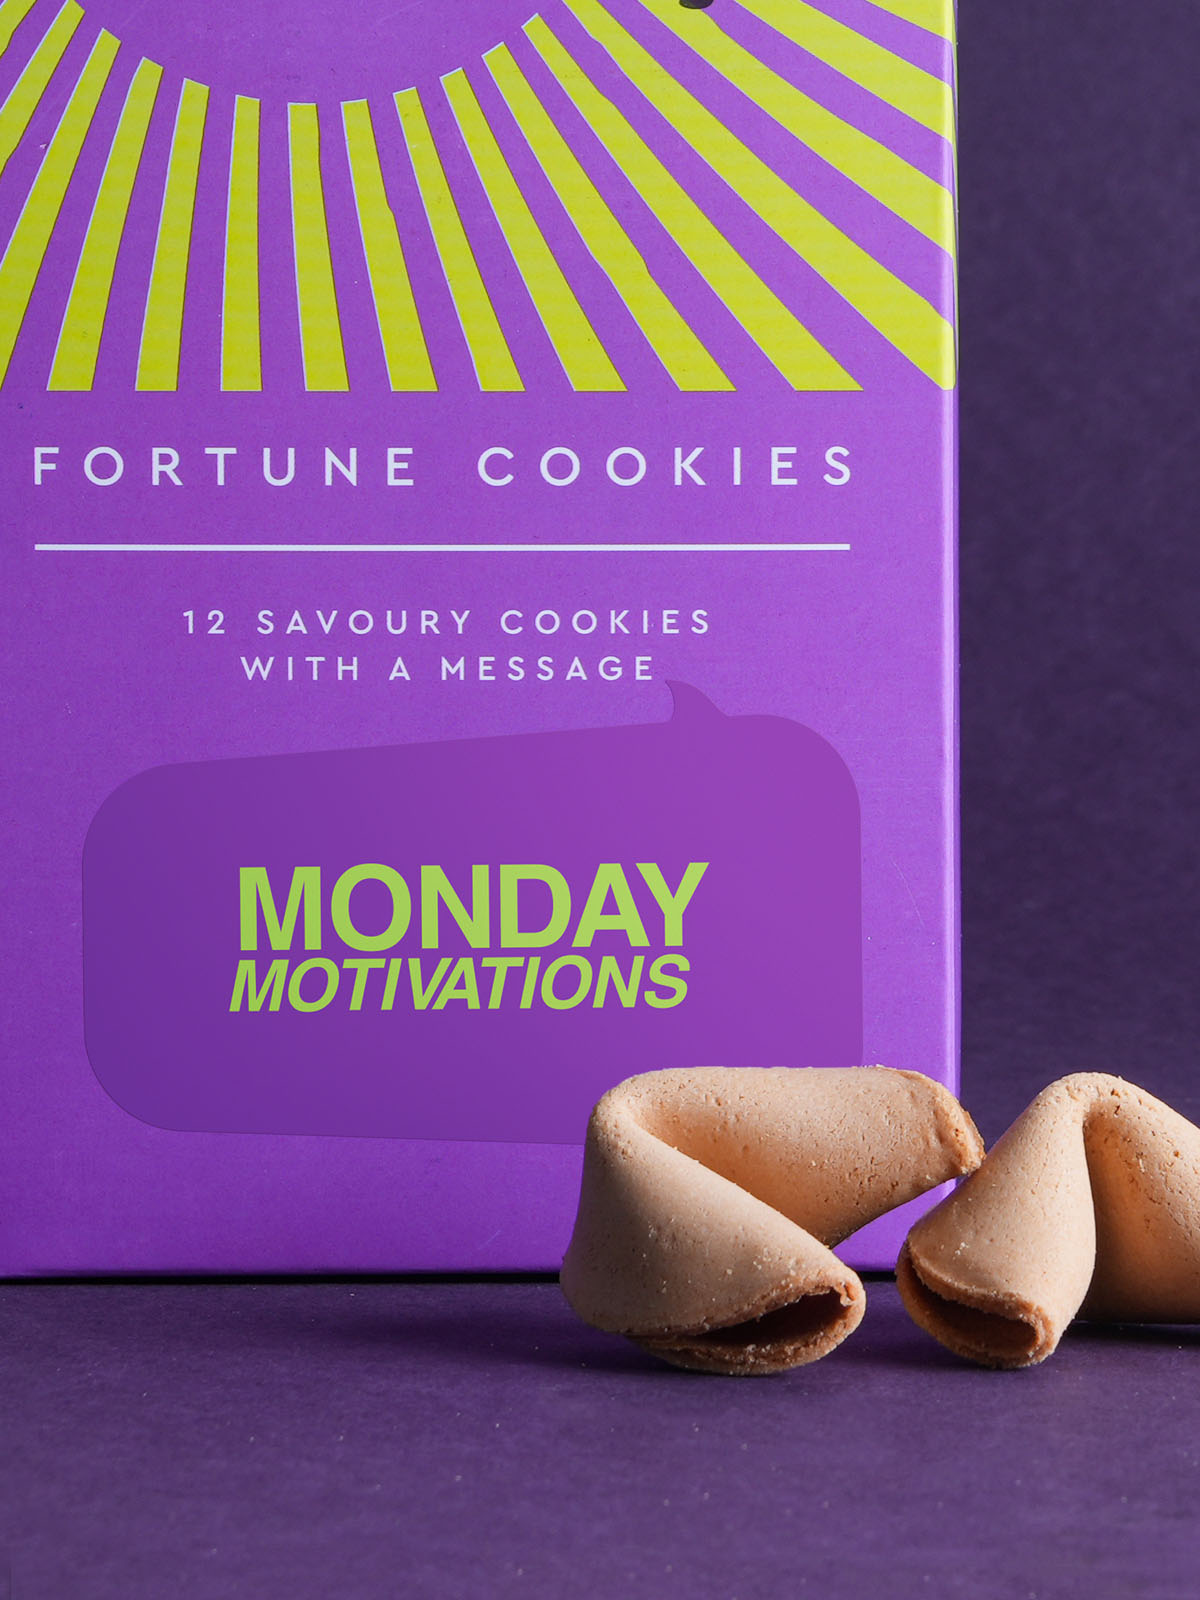 Monday Motivations: Fortune Cookies Box Of 12 - GleePops Fortune Cookies